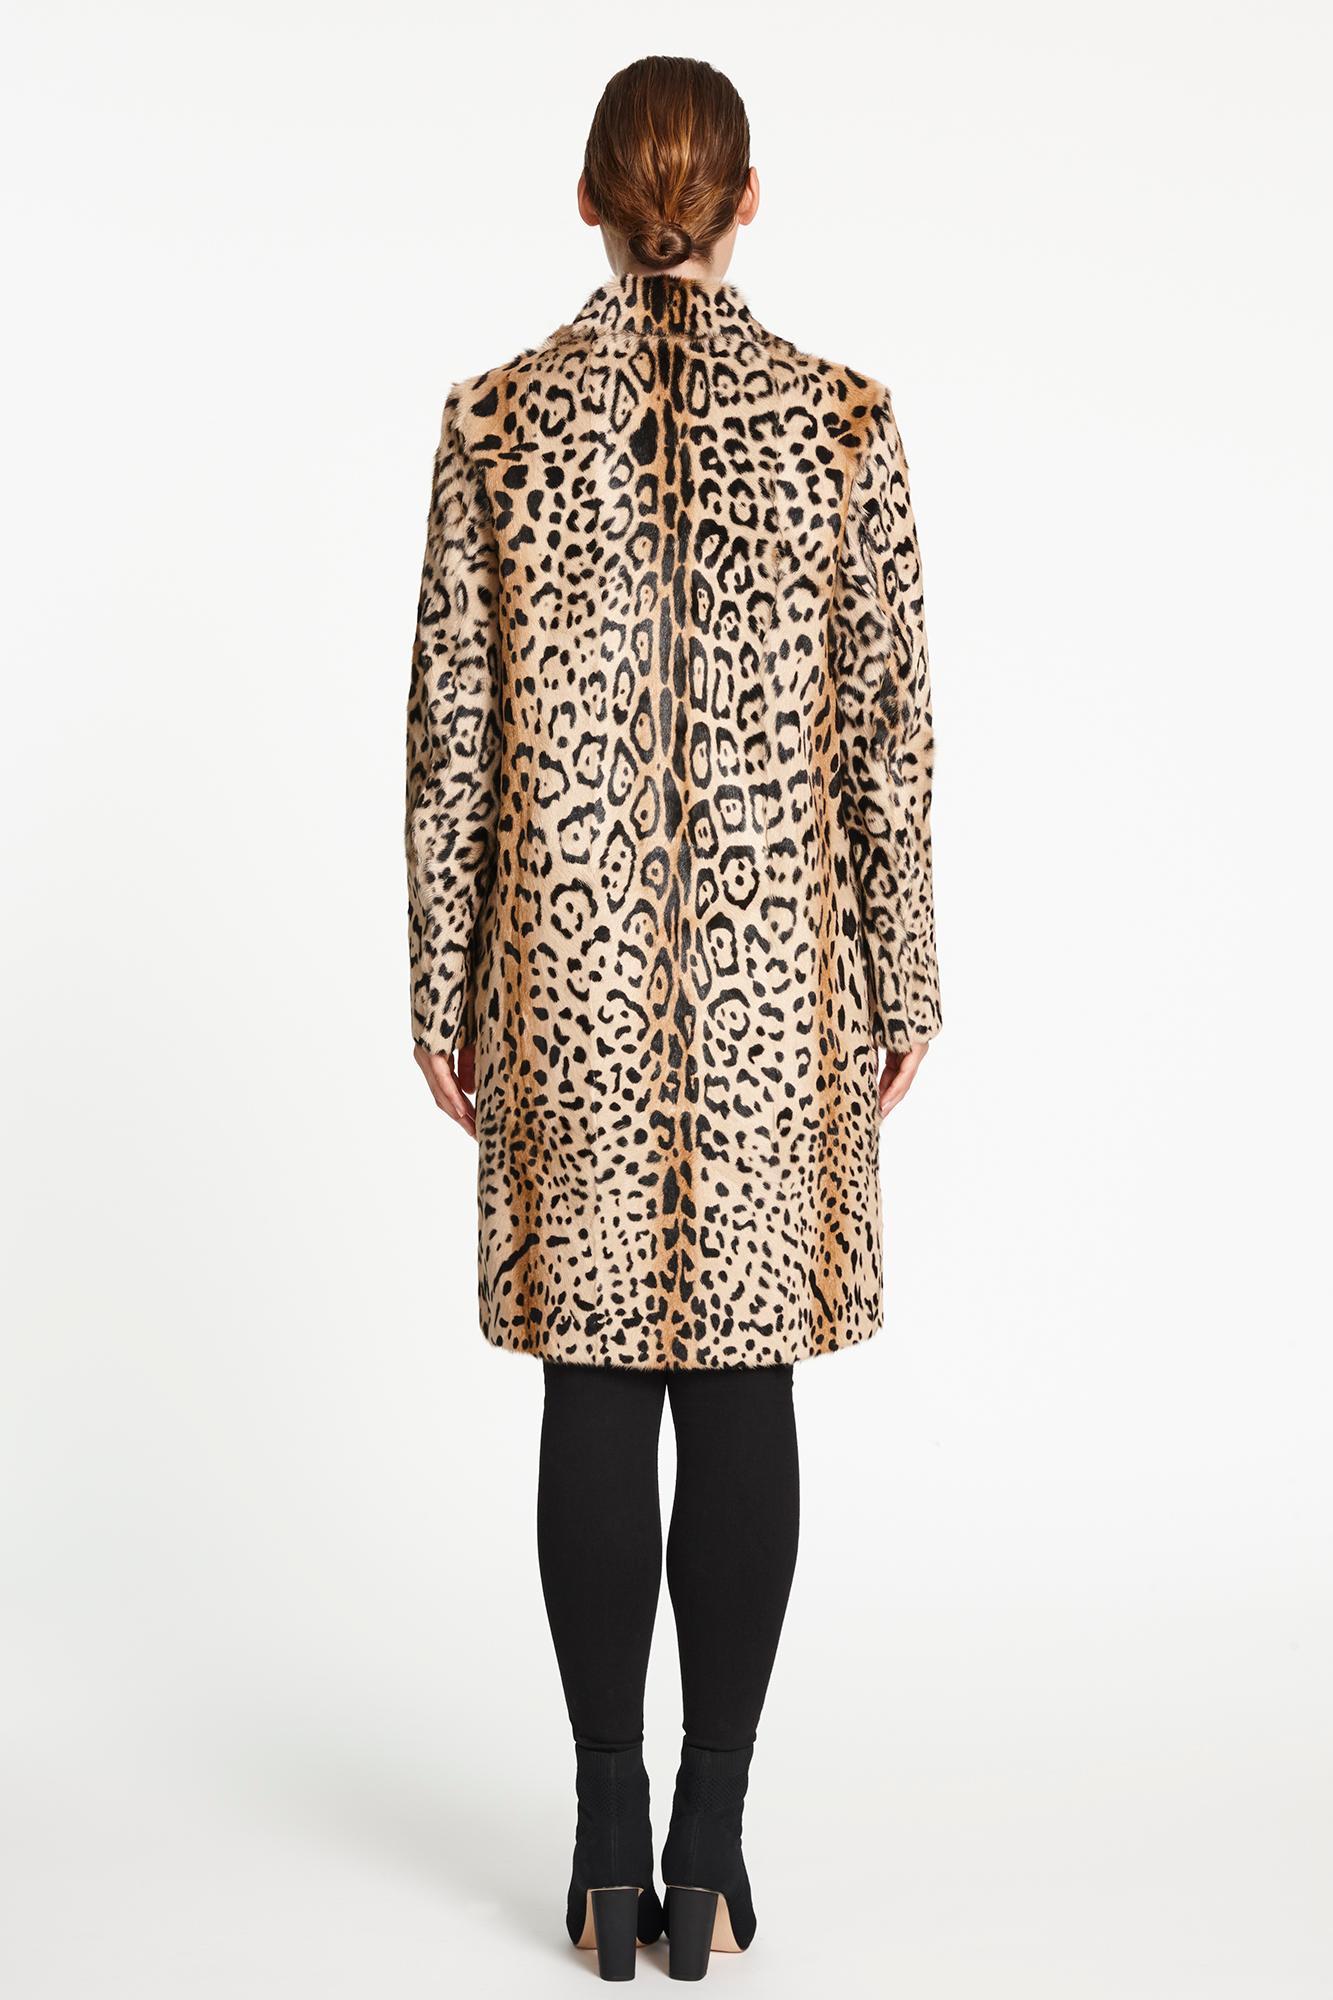 Verheyen London Leopard Print Coat in Natural Goat Hair Fur Size uk 8 3